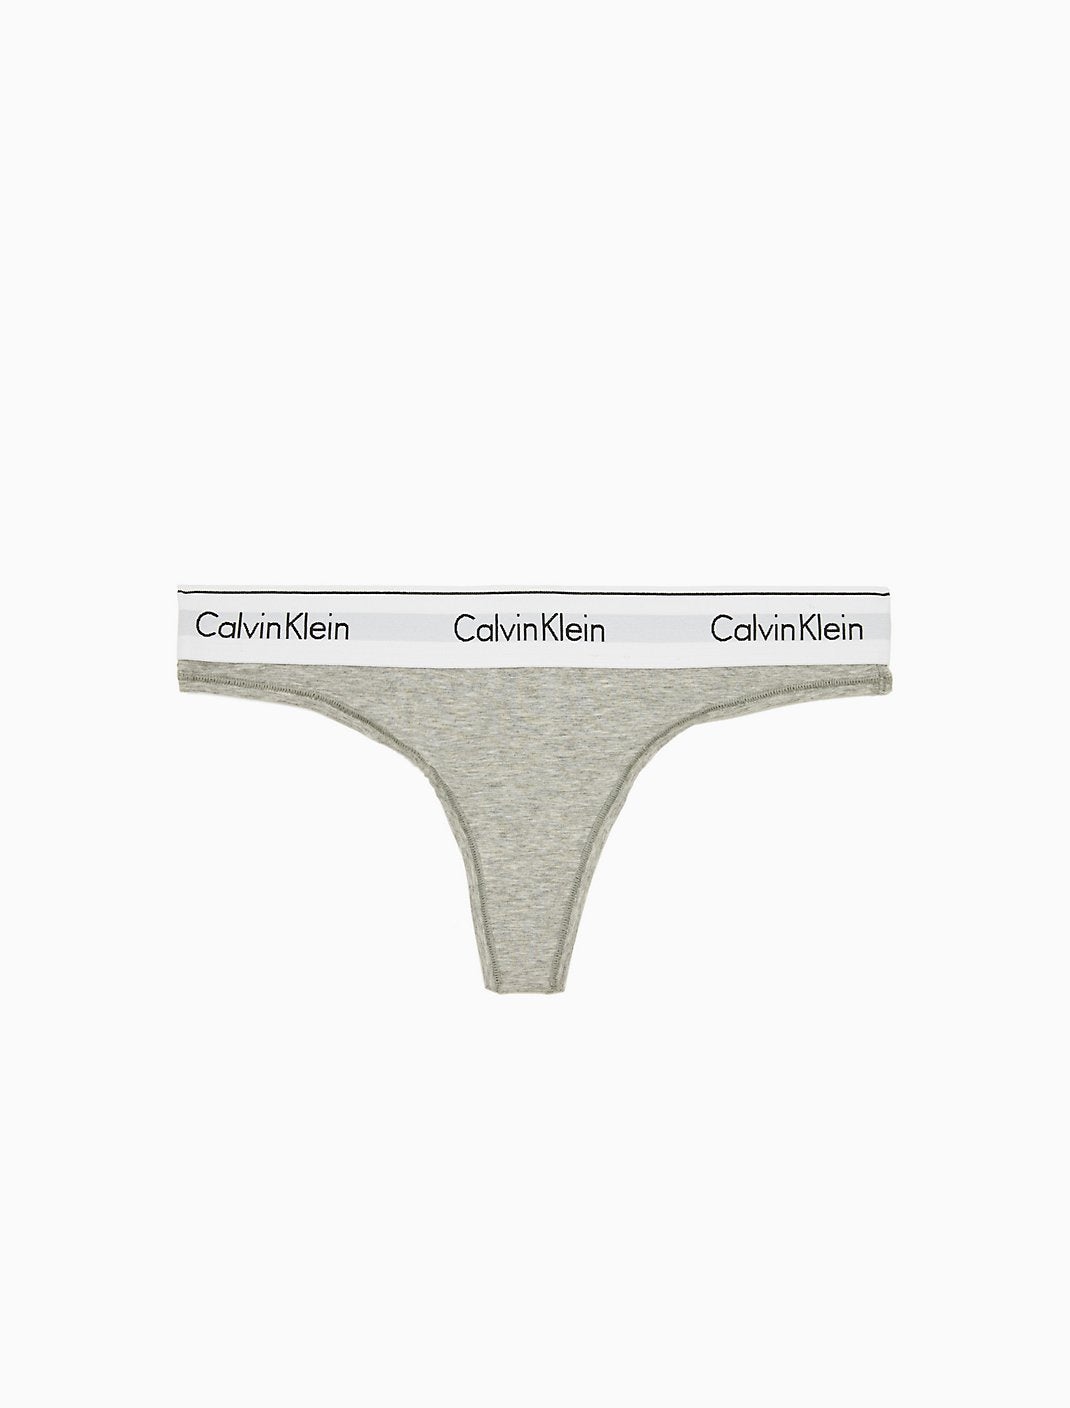 Panties Calvin Klein Radiant Cotton Thong 3 Pack Tapestry Teal